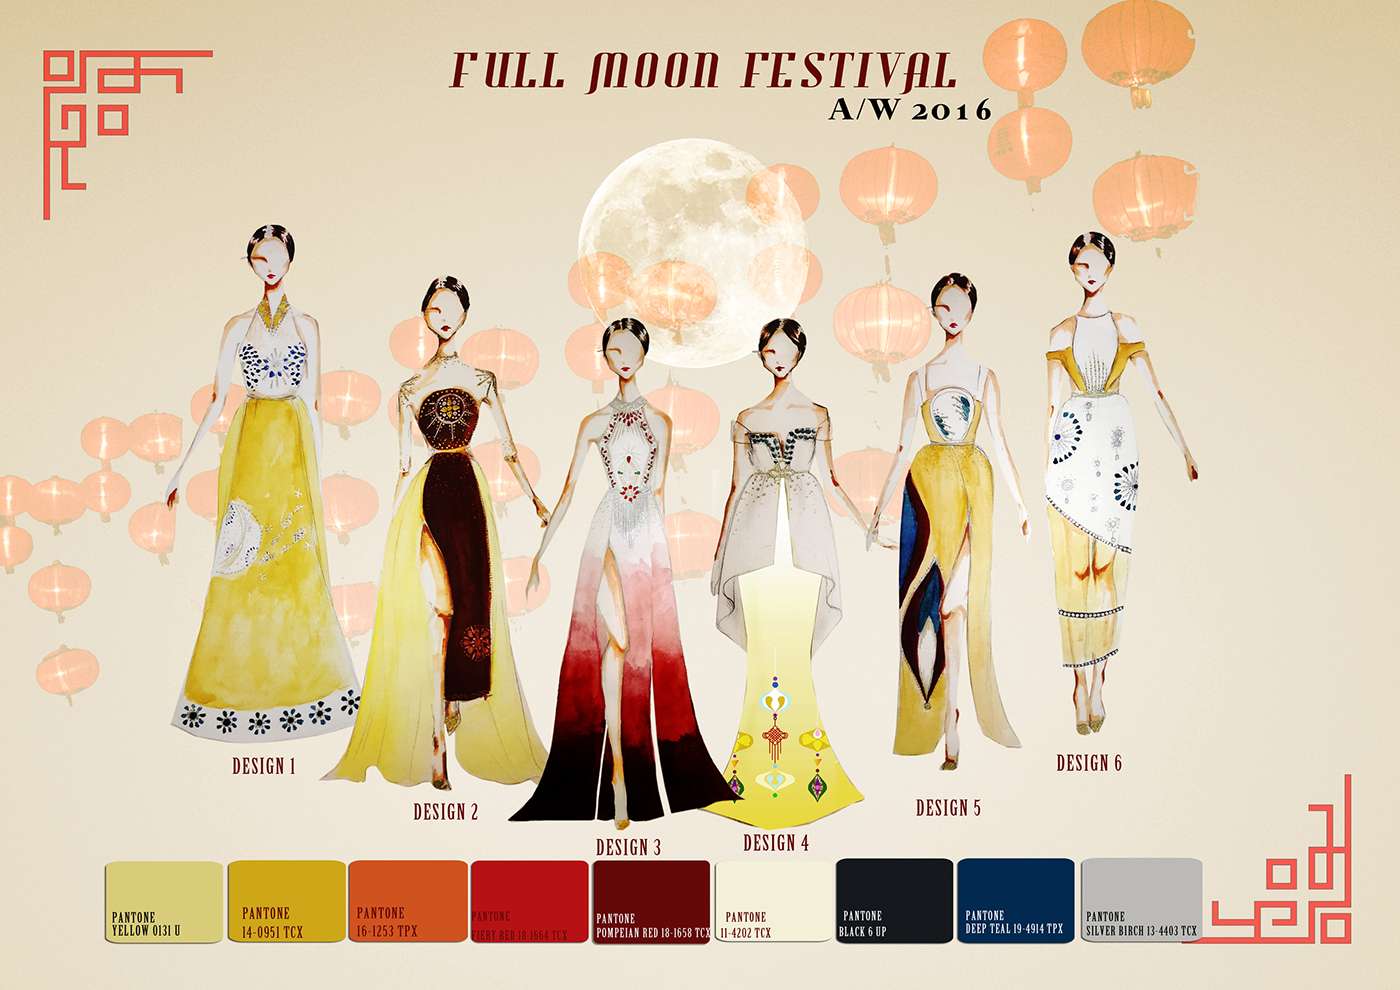 Eveningwear fashion design portfolio board Full moon festival mid autumn festival fashion study moon inspiration